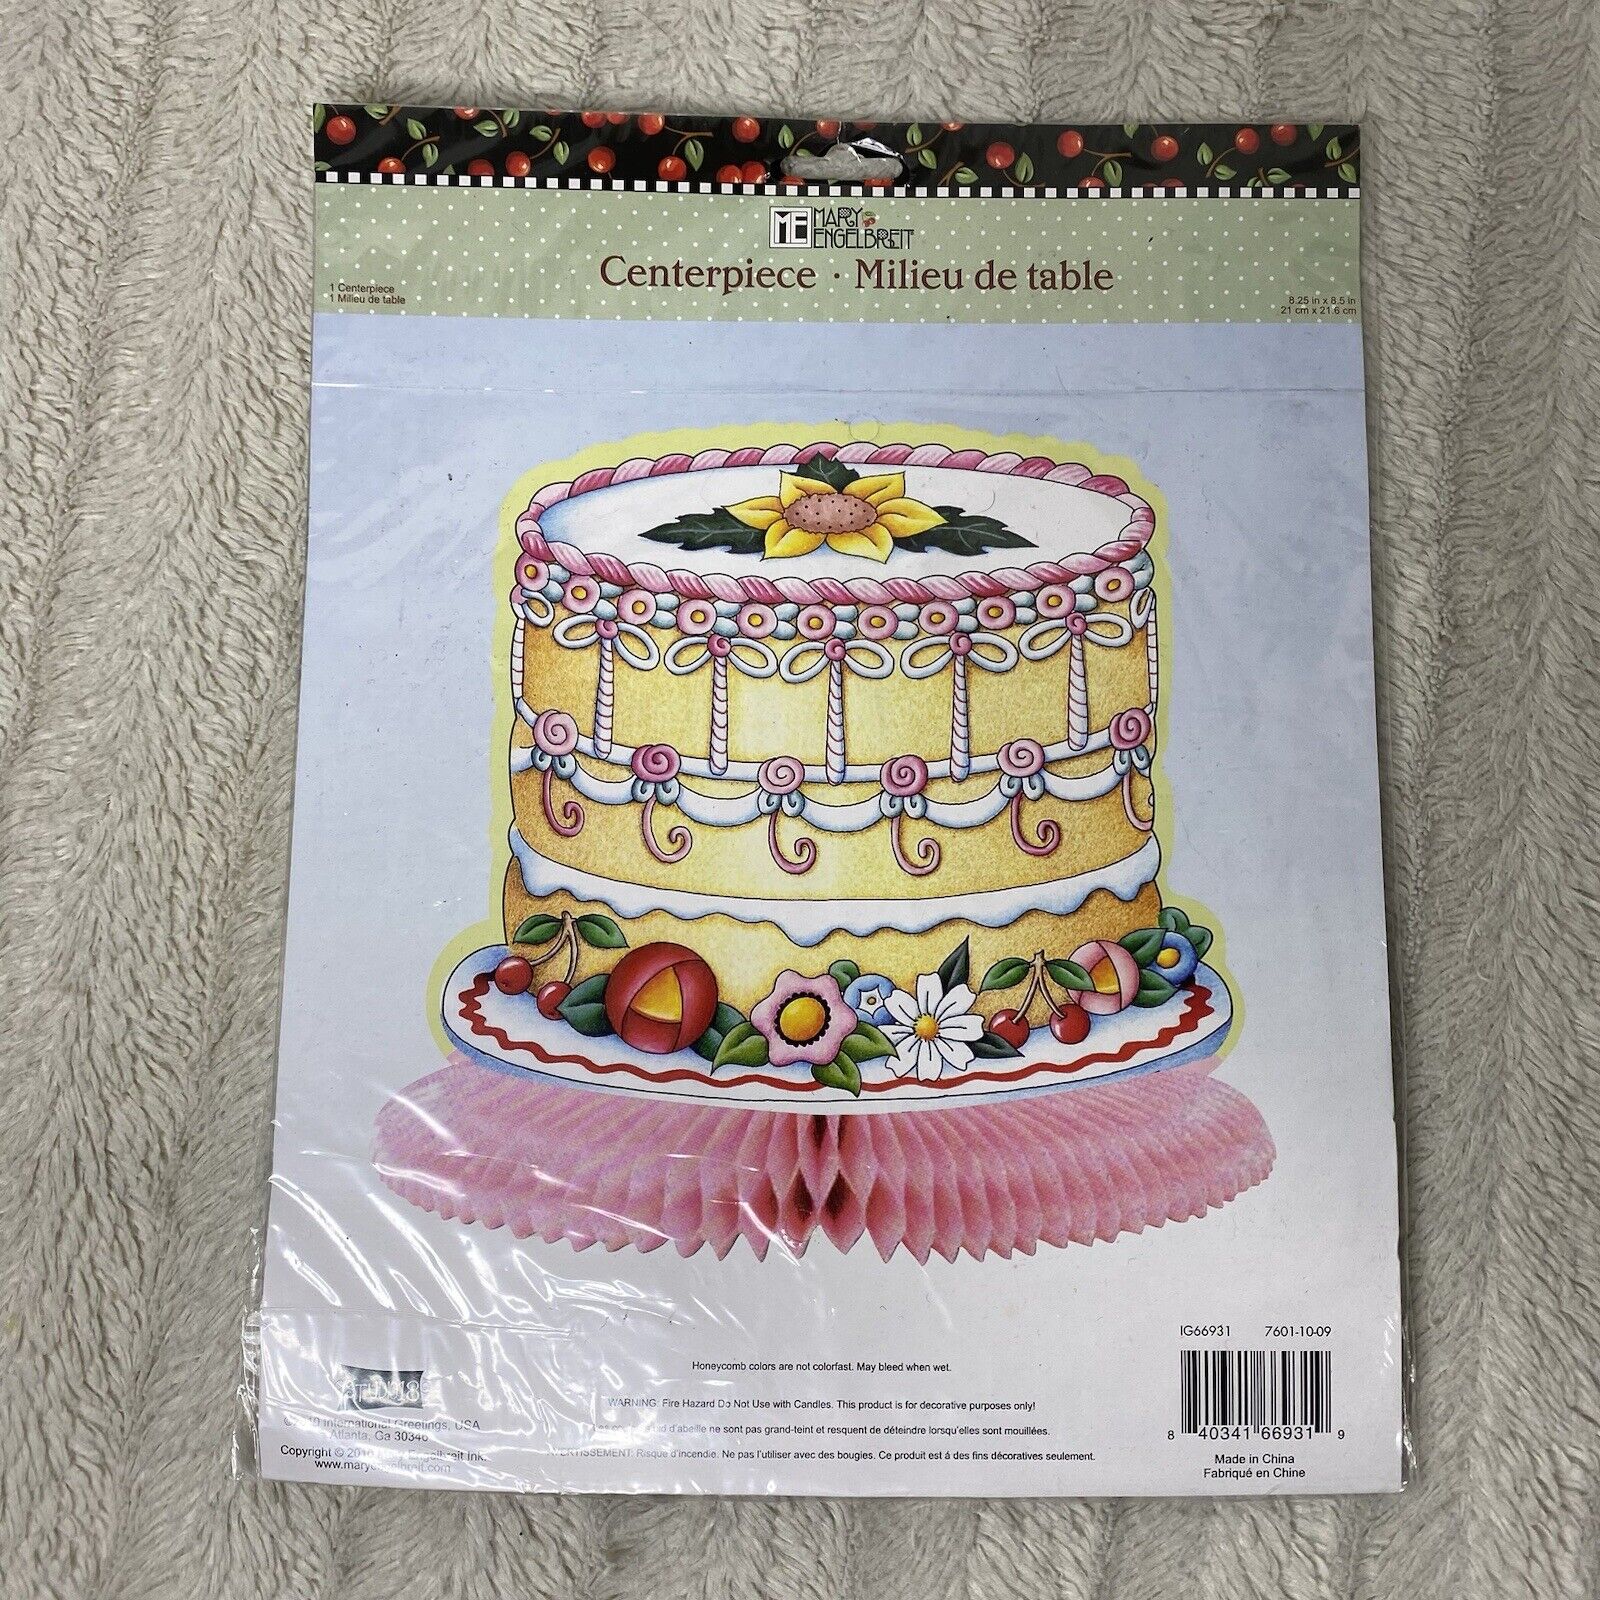 Mary Engelbreit Honeycomb Paper Centerpiece Cake Decor Birthday Decoration